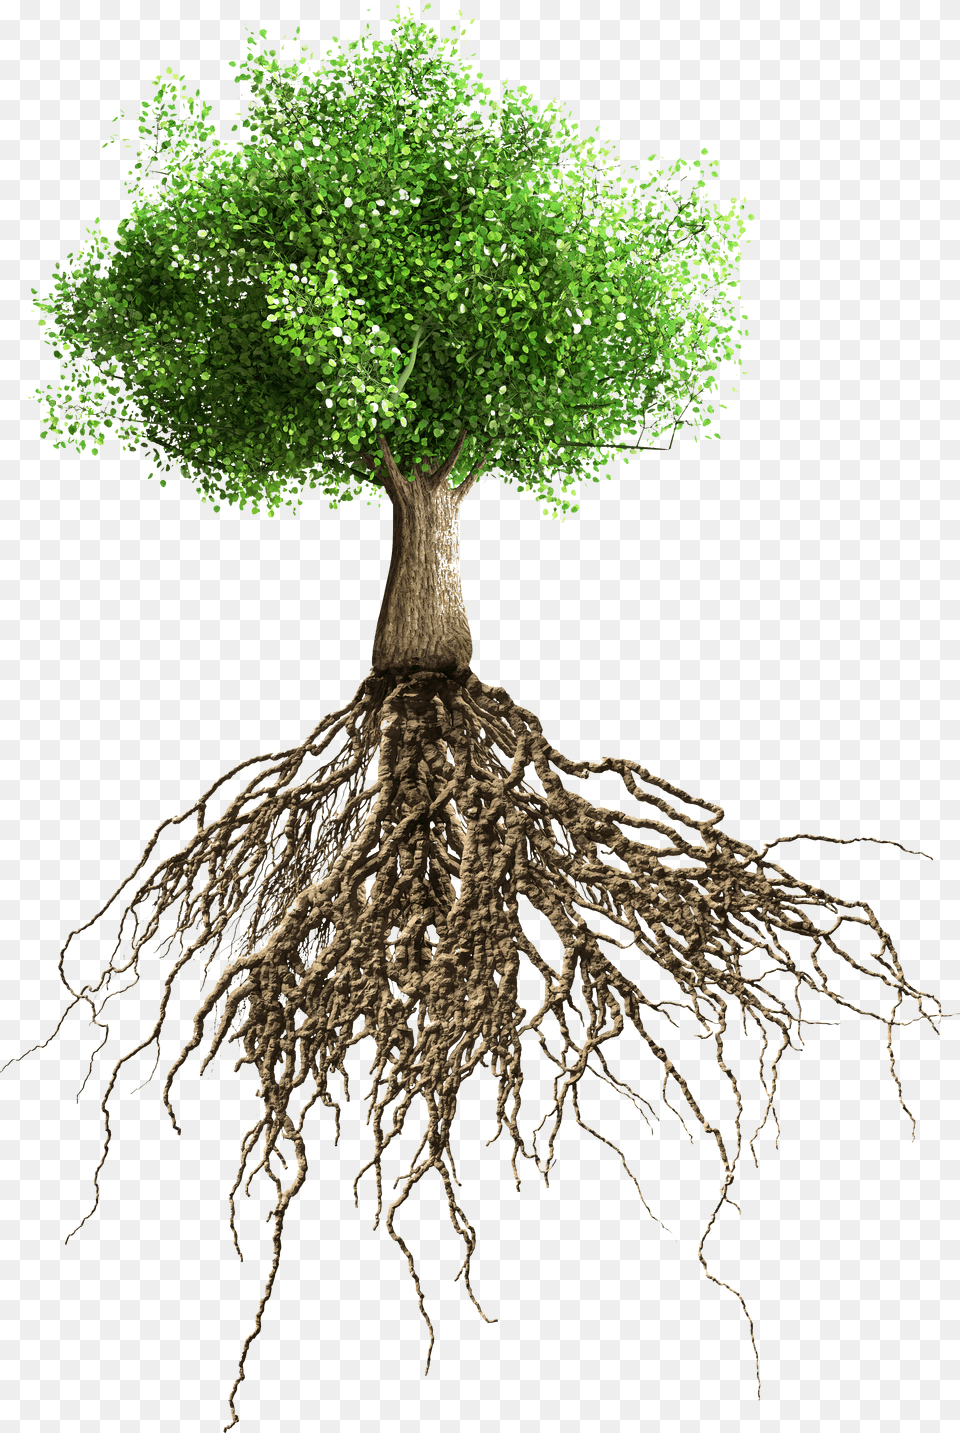 Raices Del Arbol De Mango Tree With Roots Transparent Background, Plant, Root Png Image